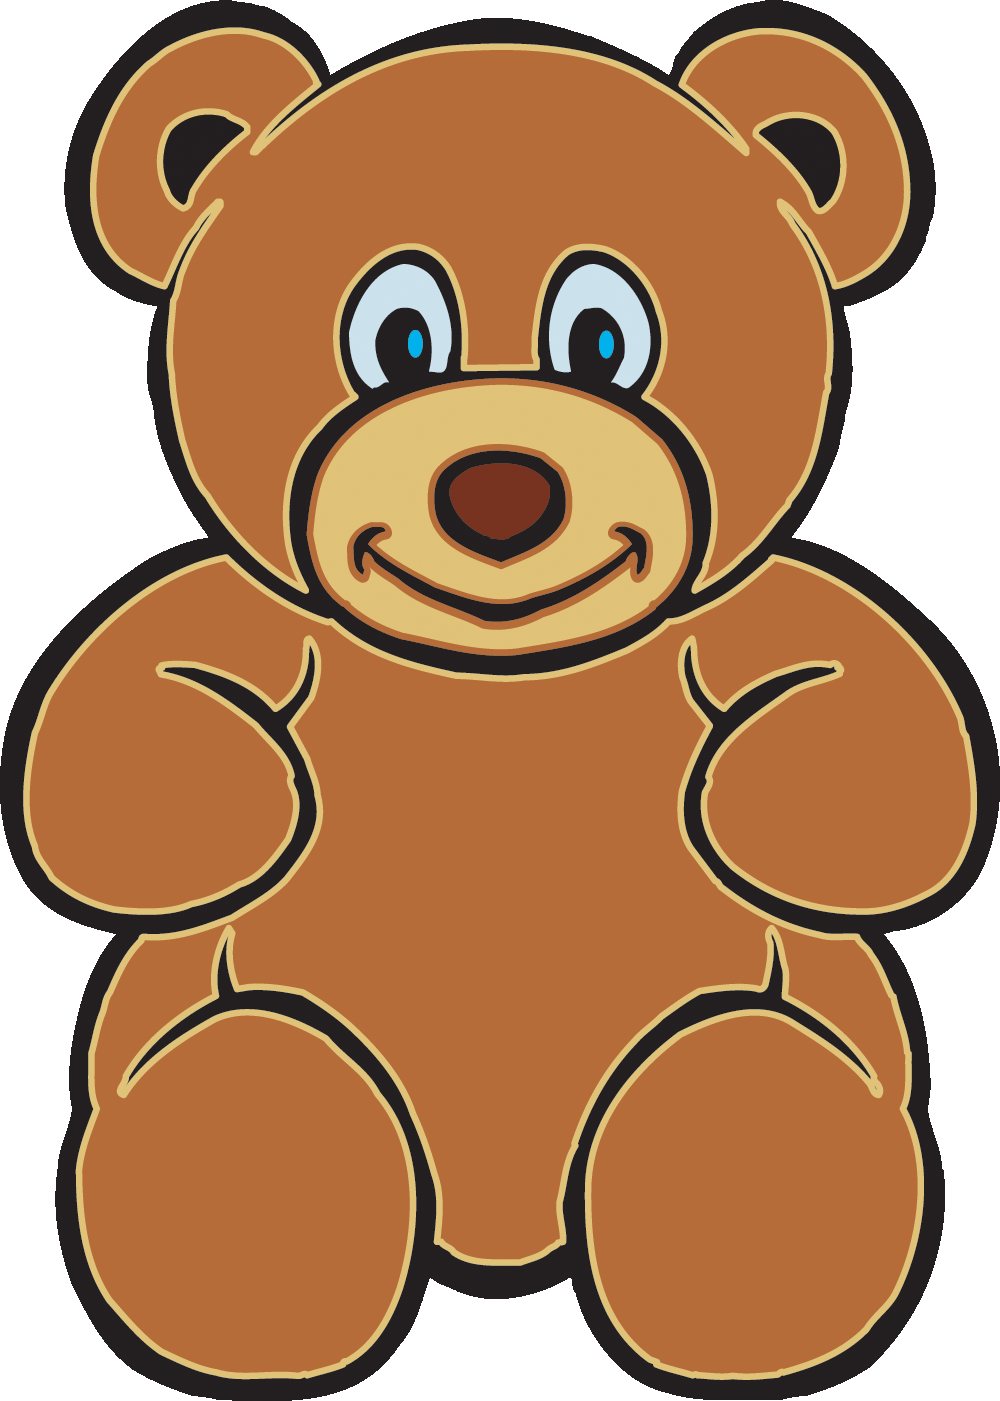 Teddy bear clip art free clipart clipartwiz